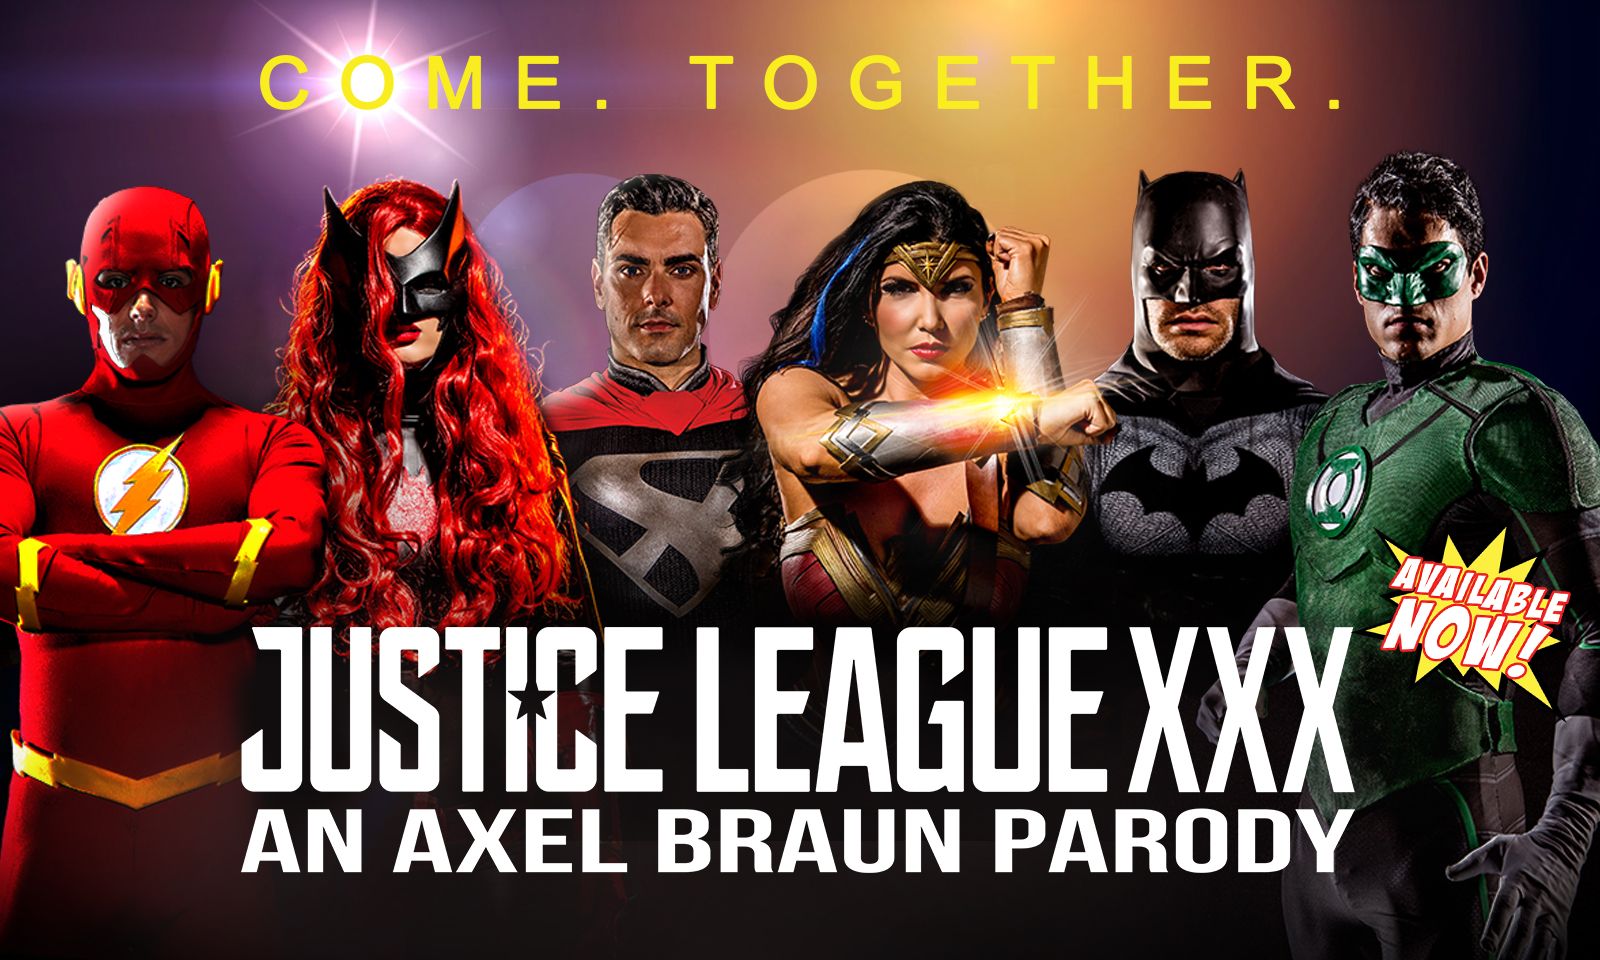 Justice league xxx an axel braun parody